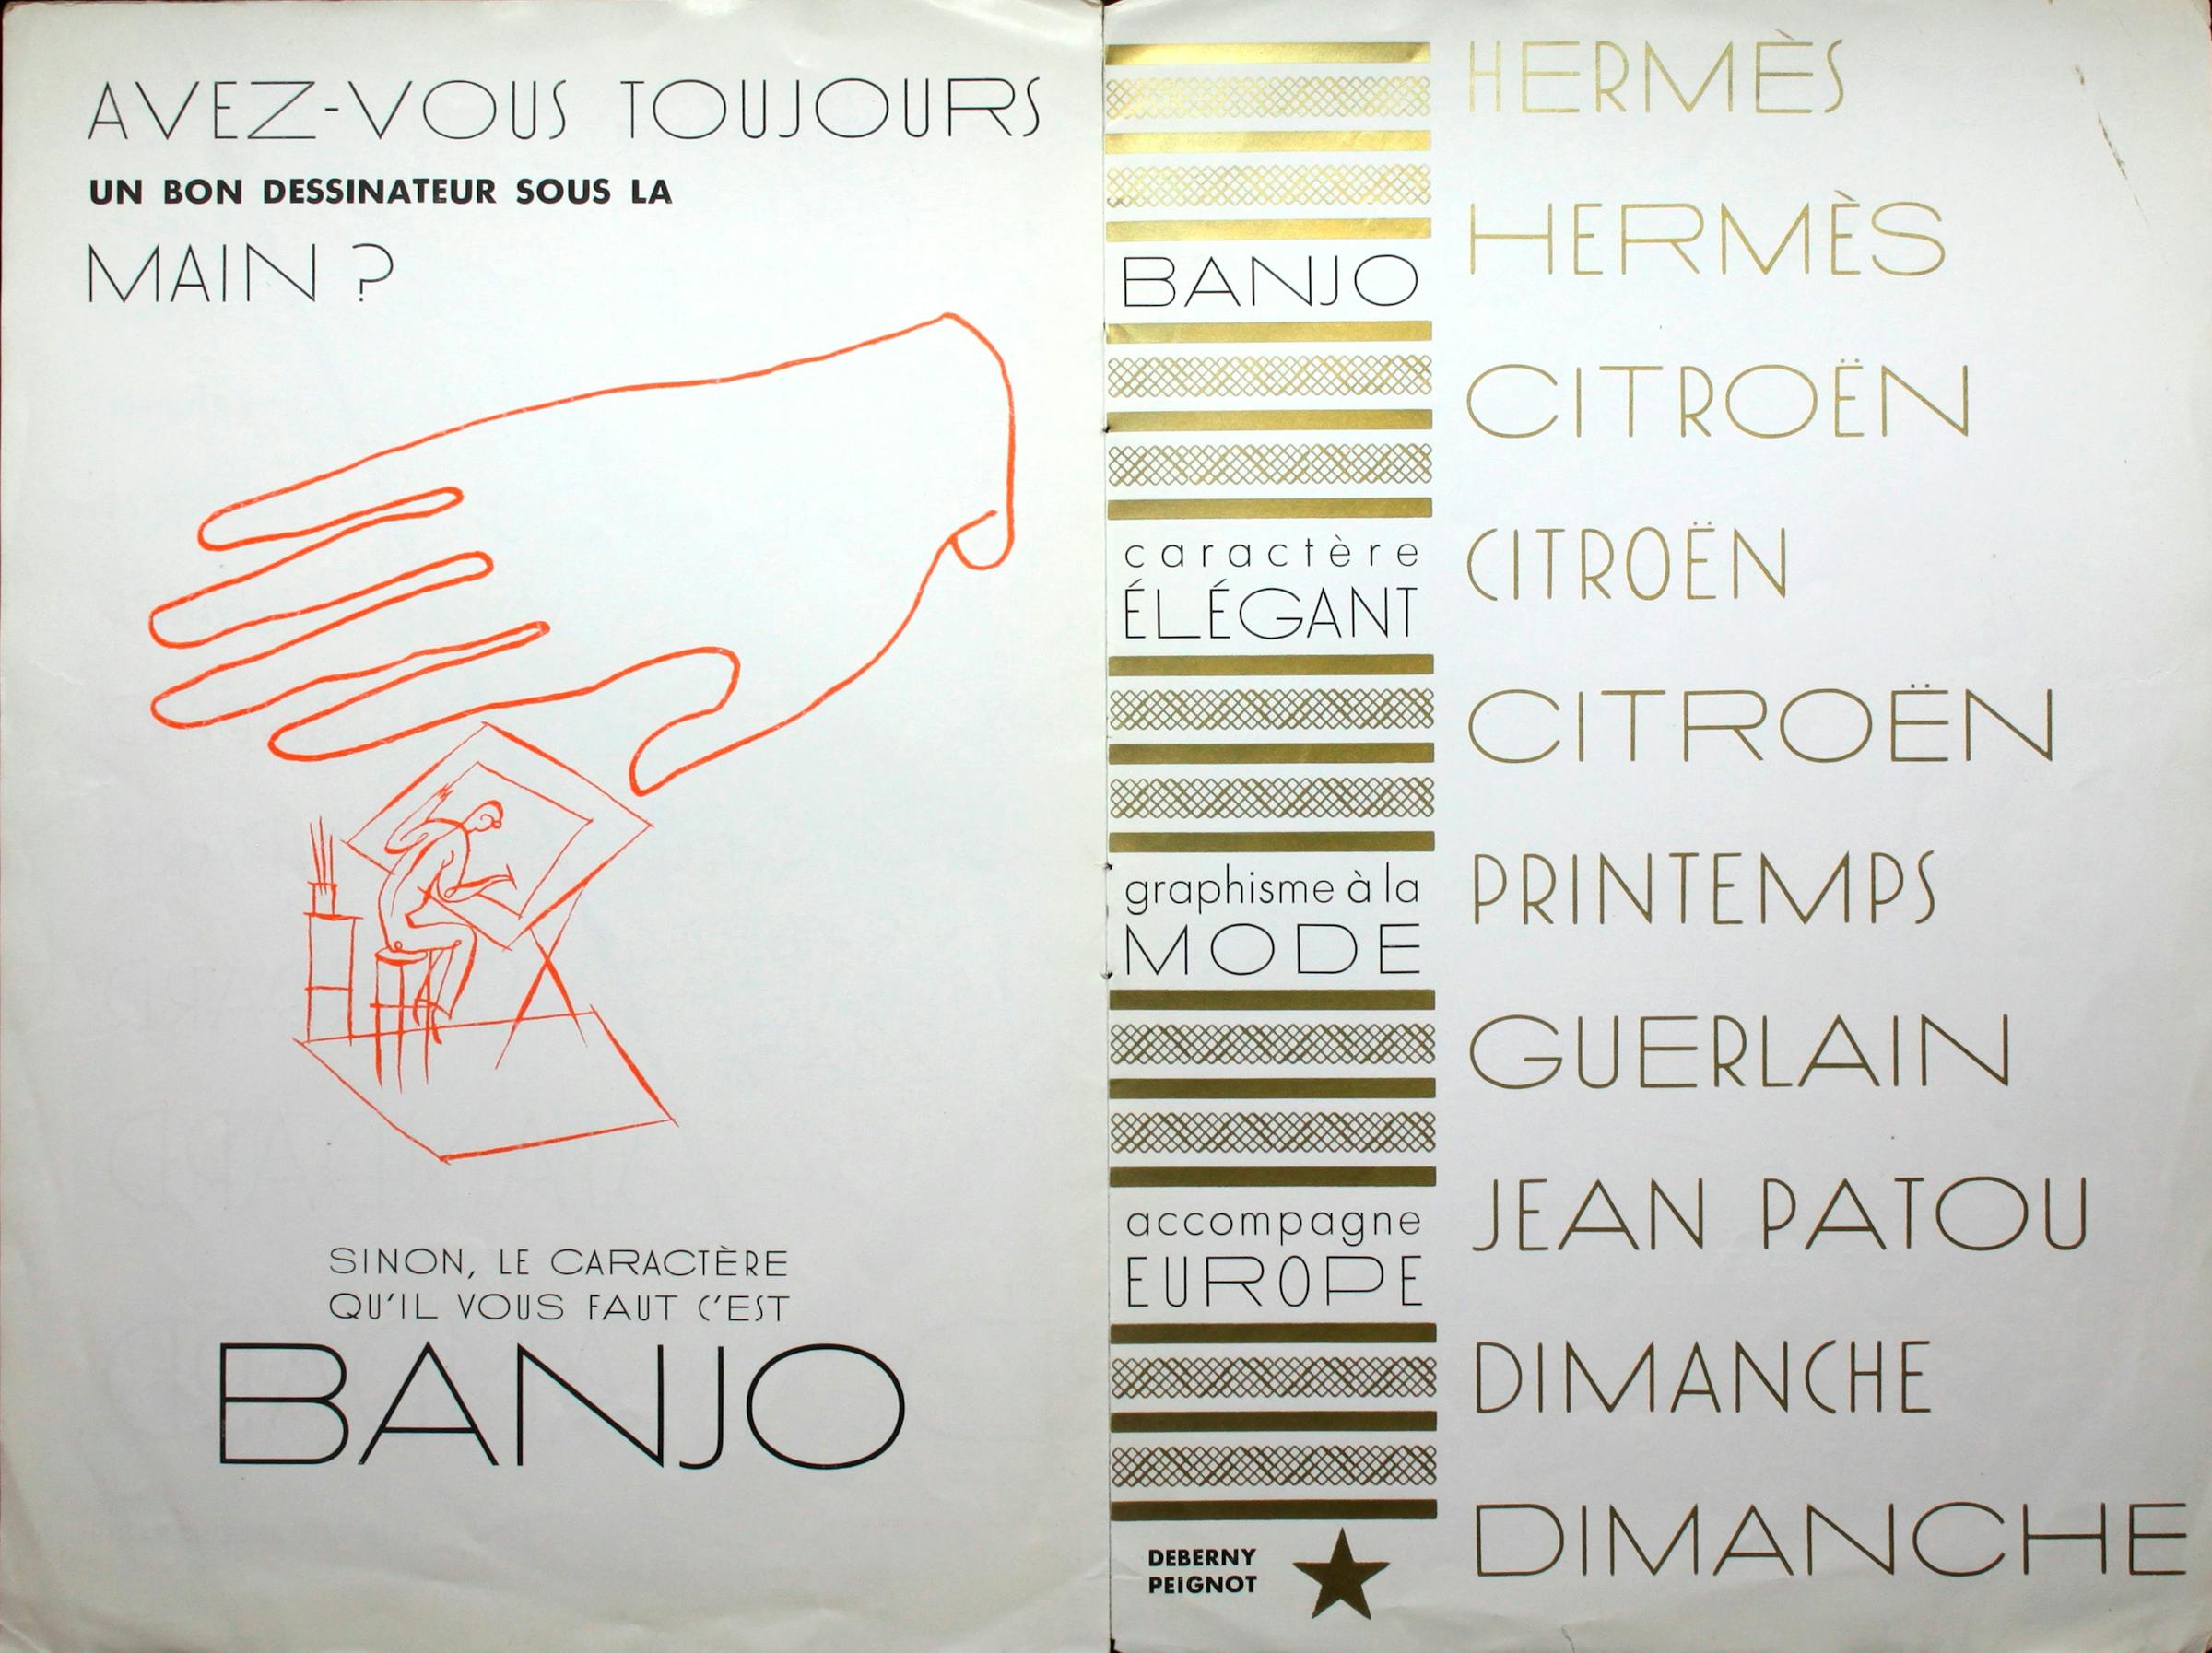 Deberny et Peignot, “Banjo”, 1932